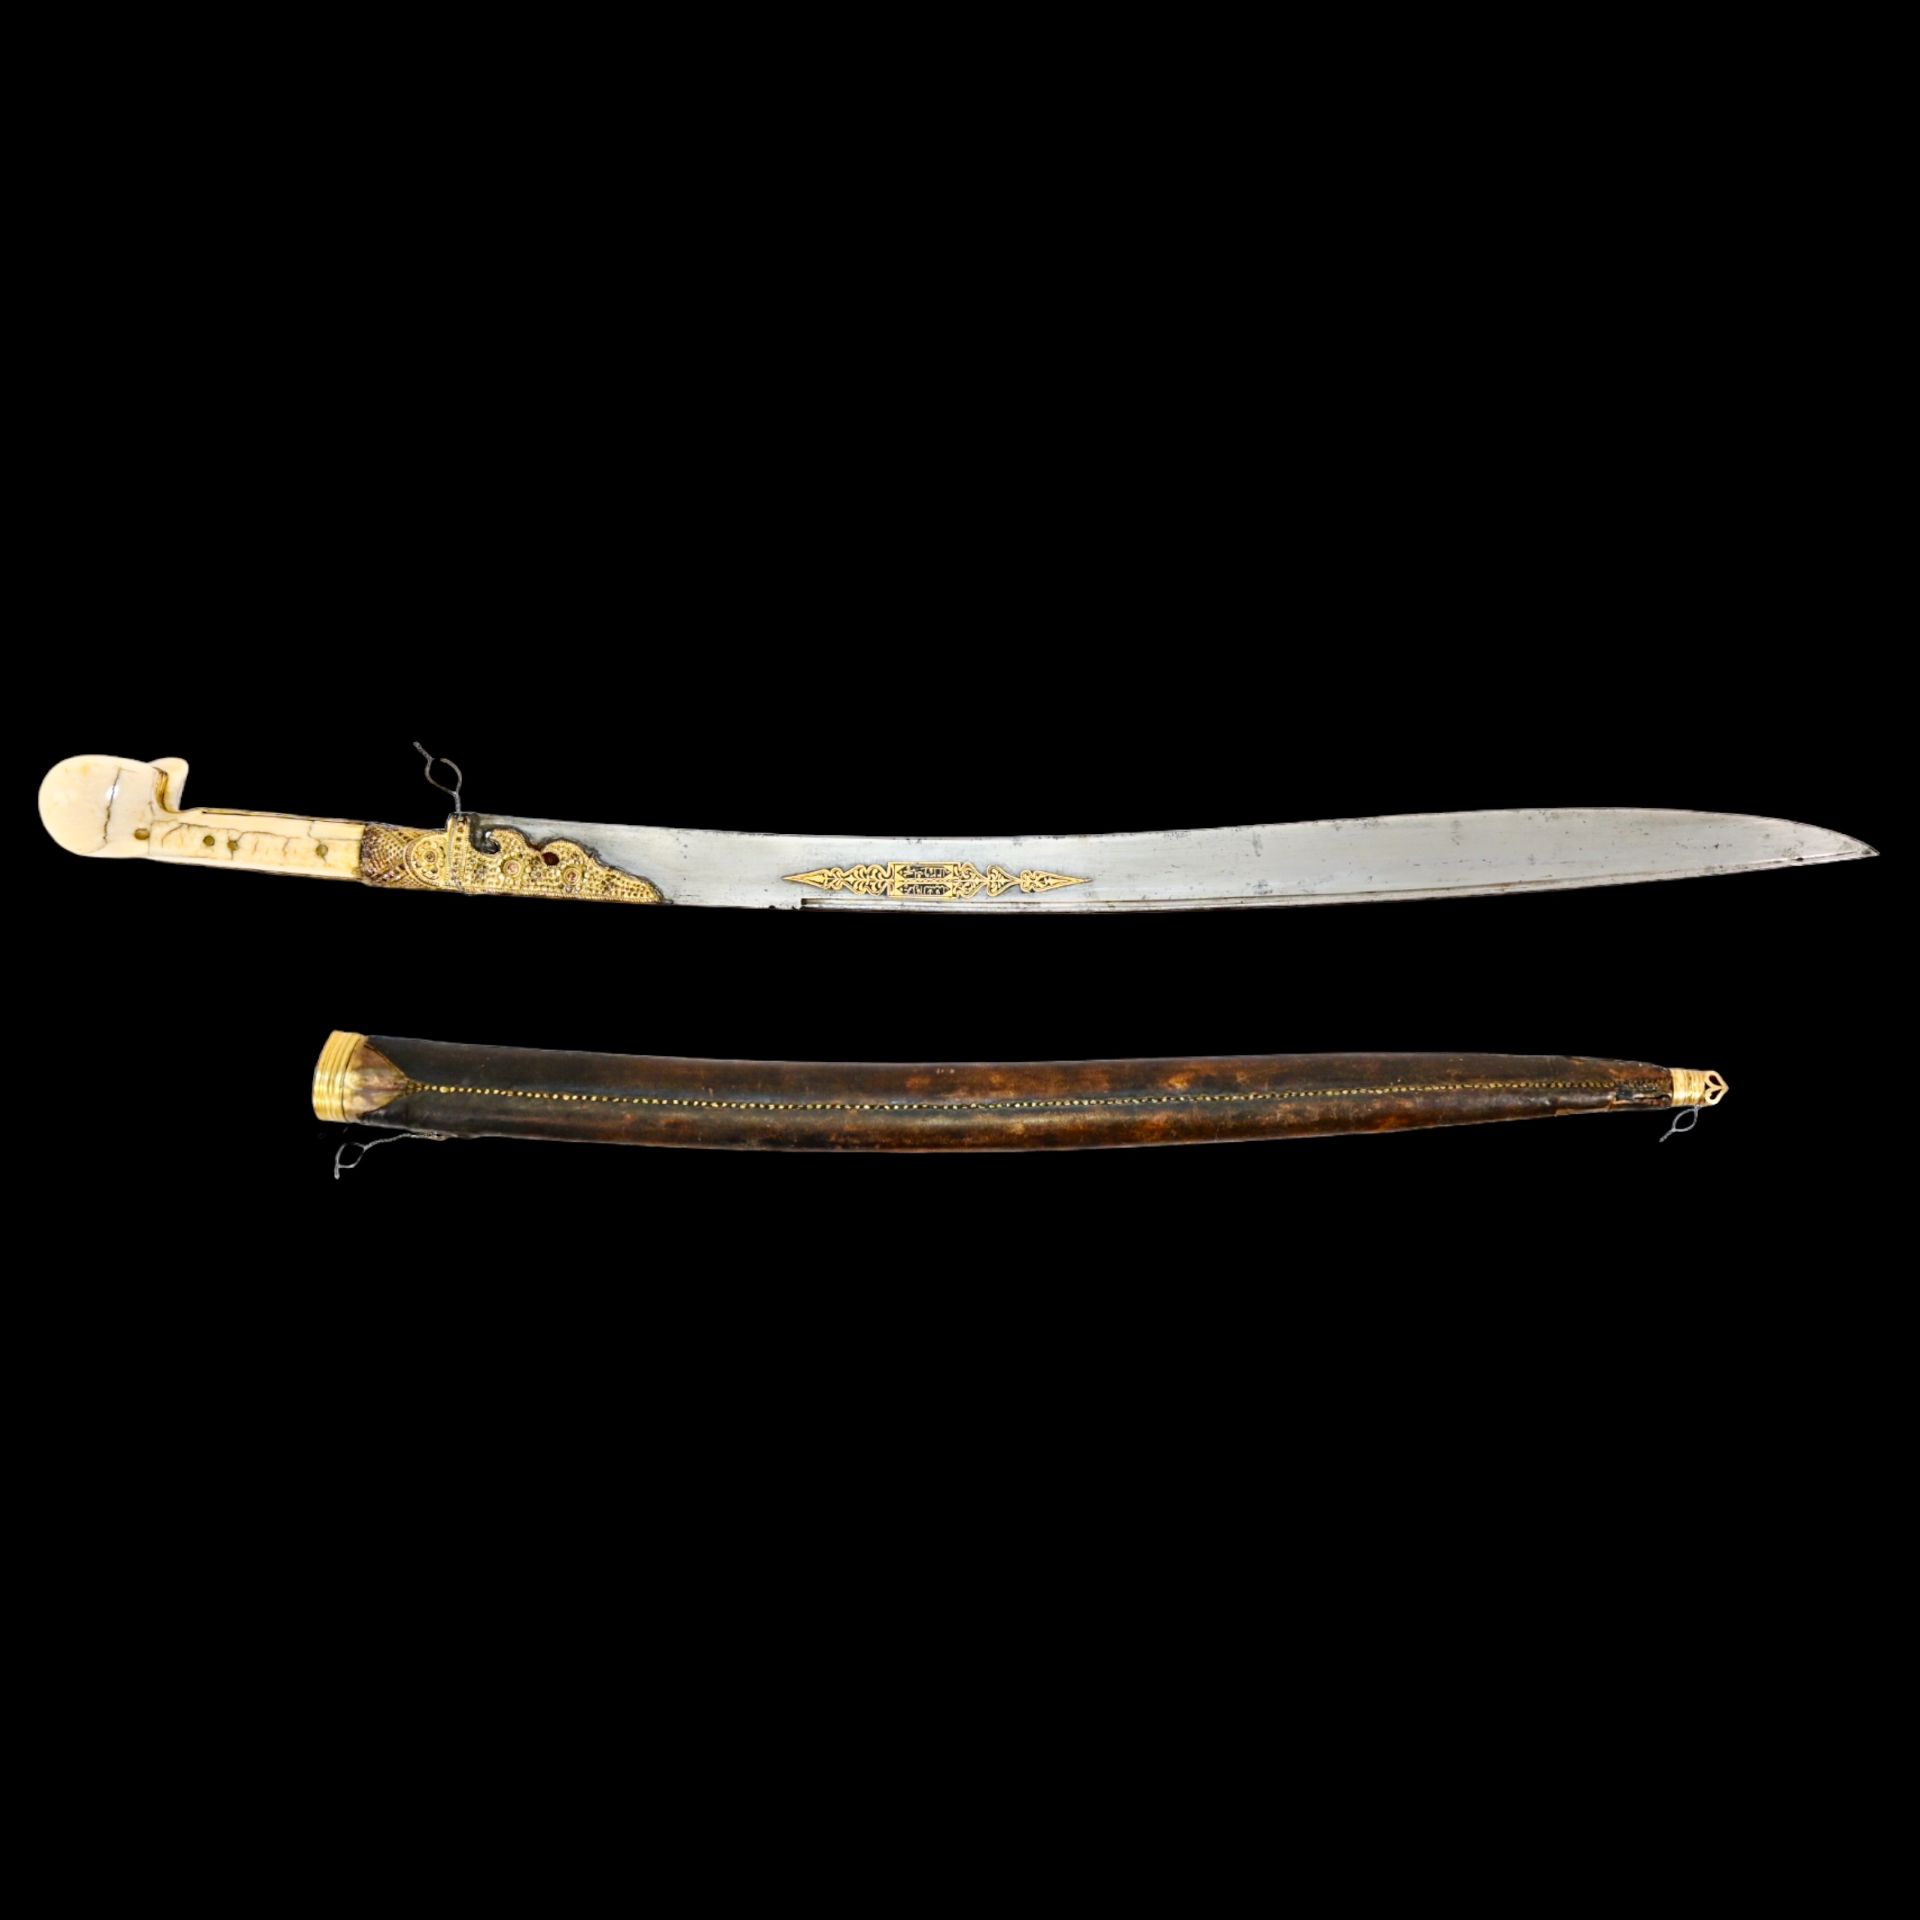 Magnificent Ottoman yatagan sword with bone hilt and gold kofgari on the blade, 1823. - Image 31 of 32